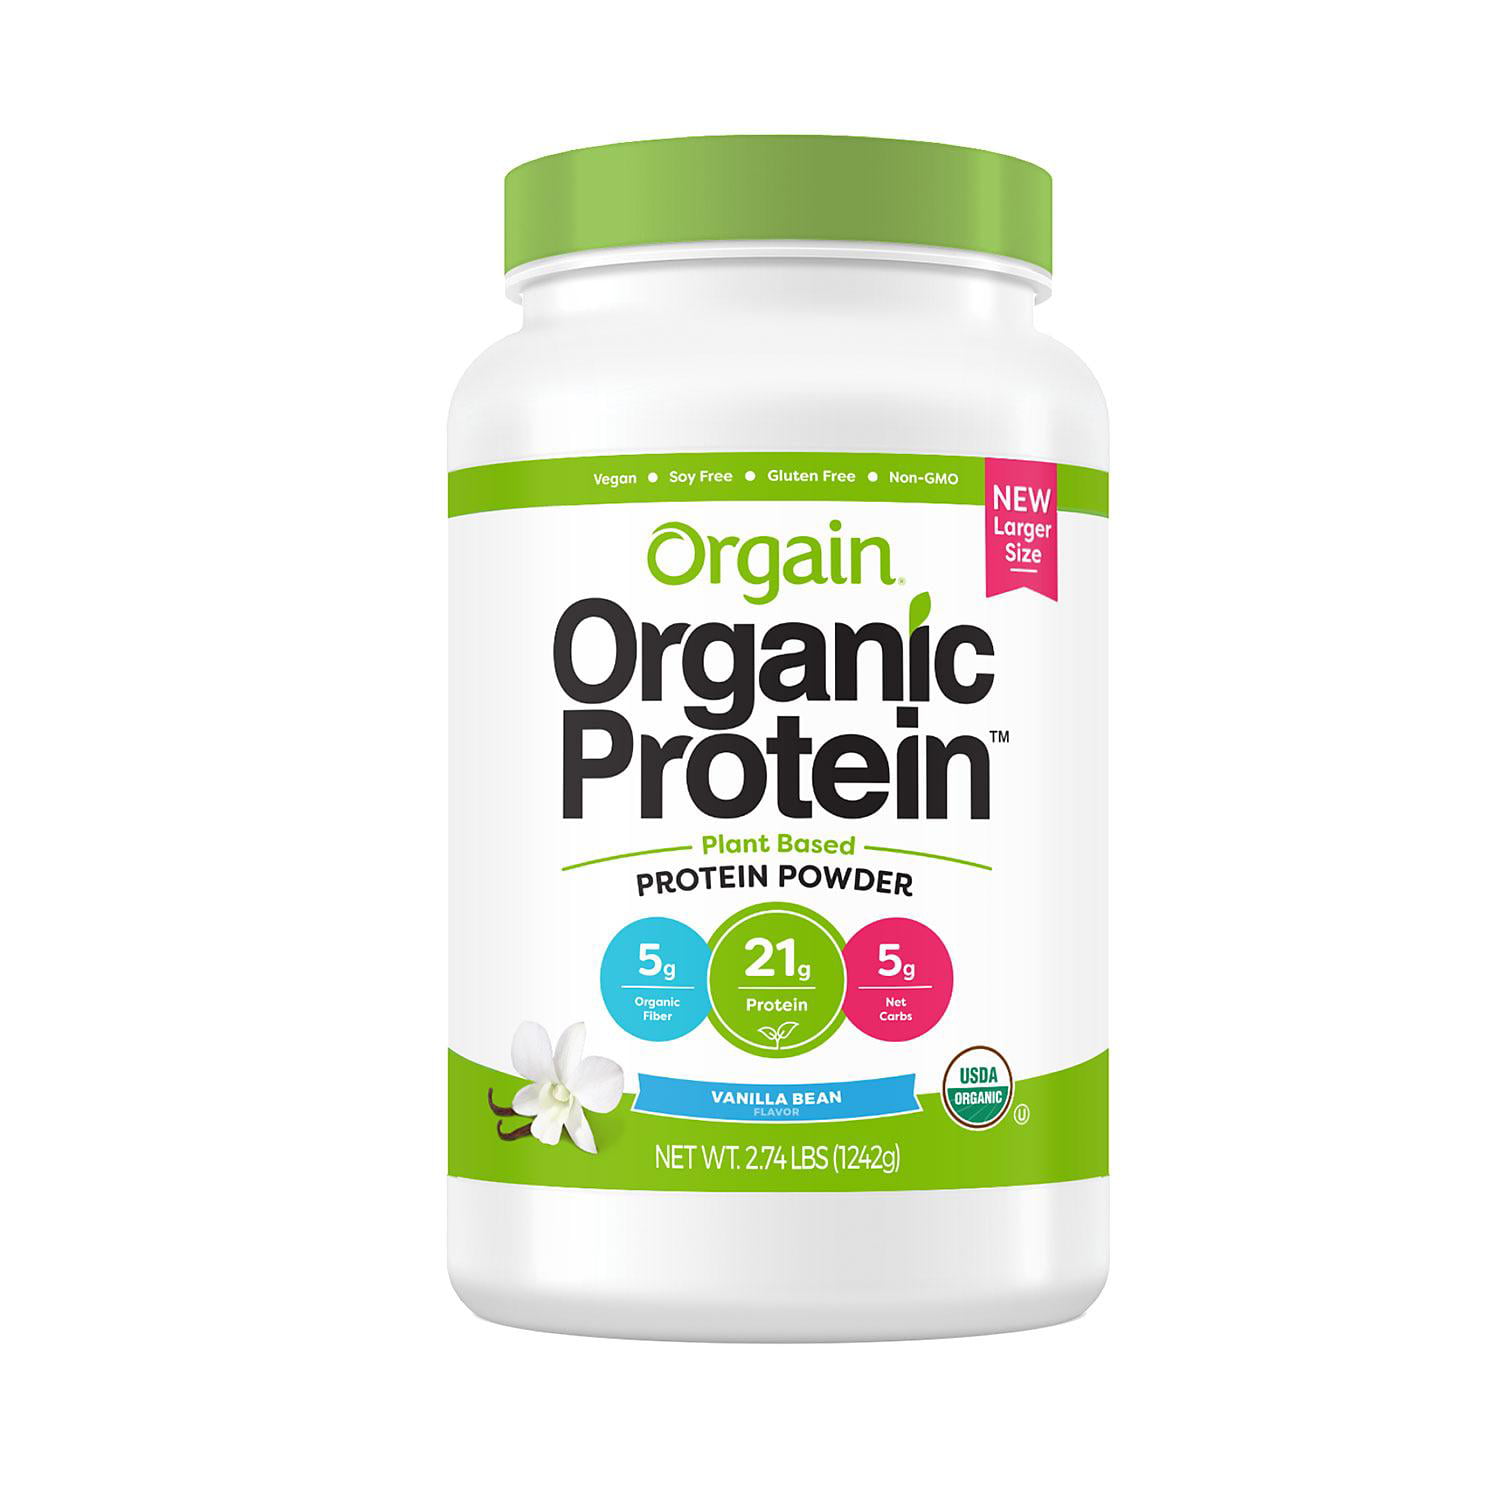 The OrgainÂ® Organic Proteinâ„¢ Plant Based Powder Vanilla Bean 274 Lbs